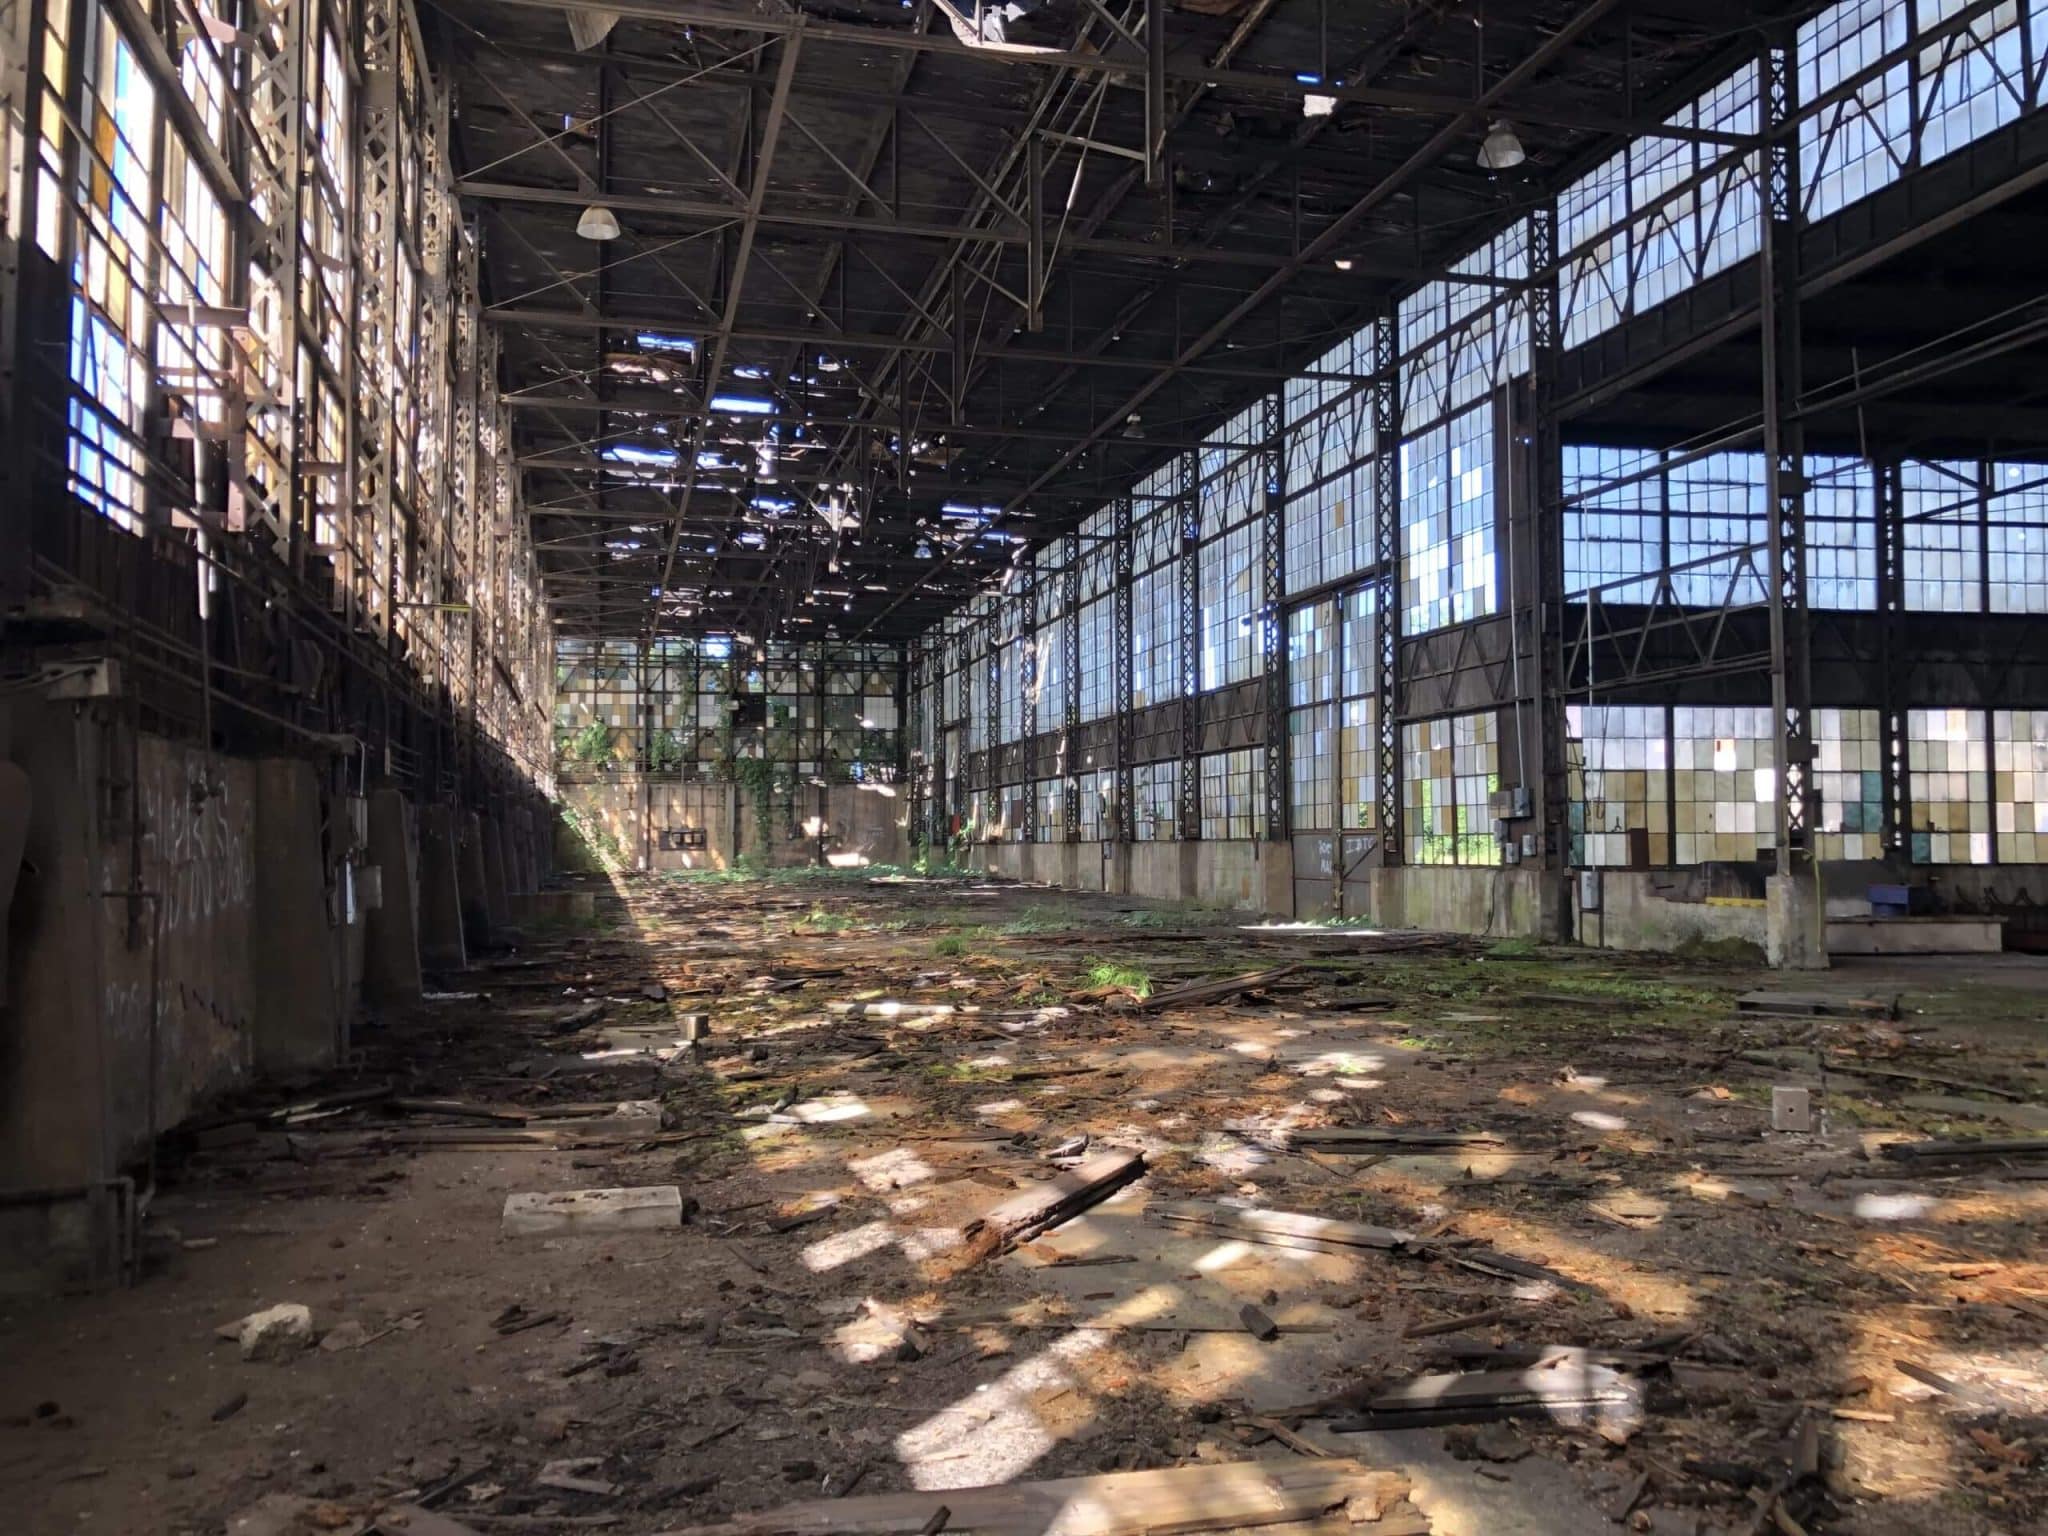 old industrial building - Caldwell Tank Industrial Site in Newnan, GA